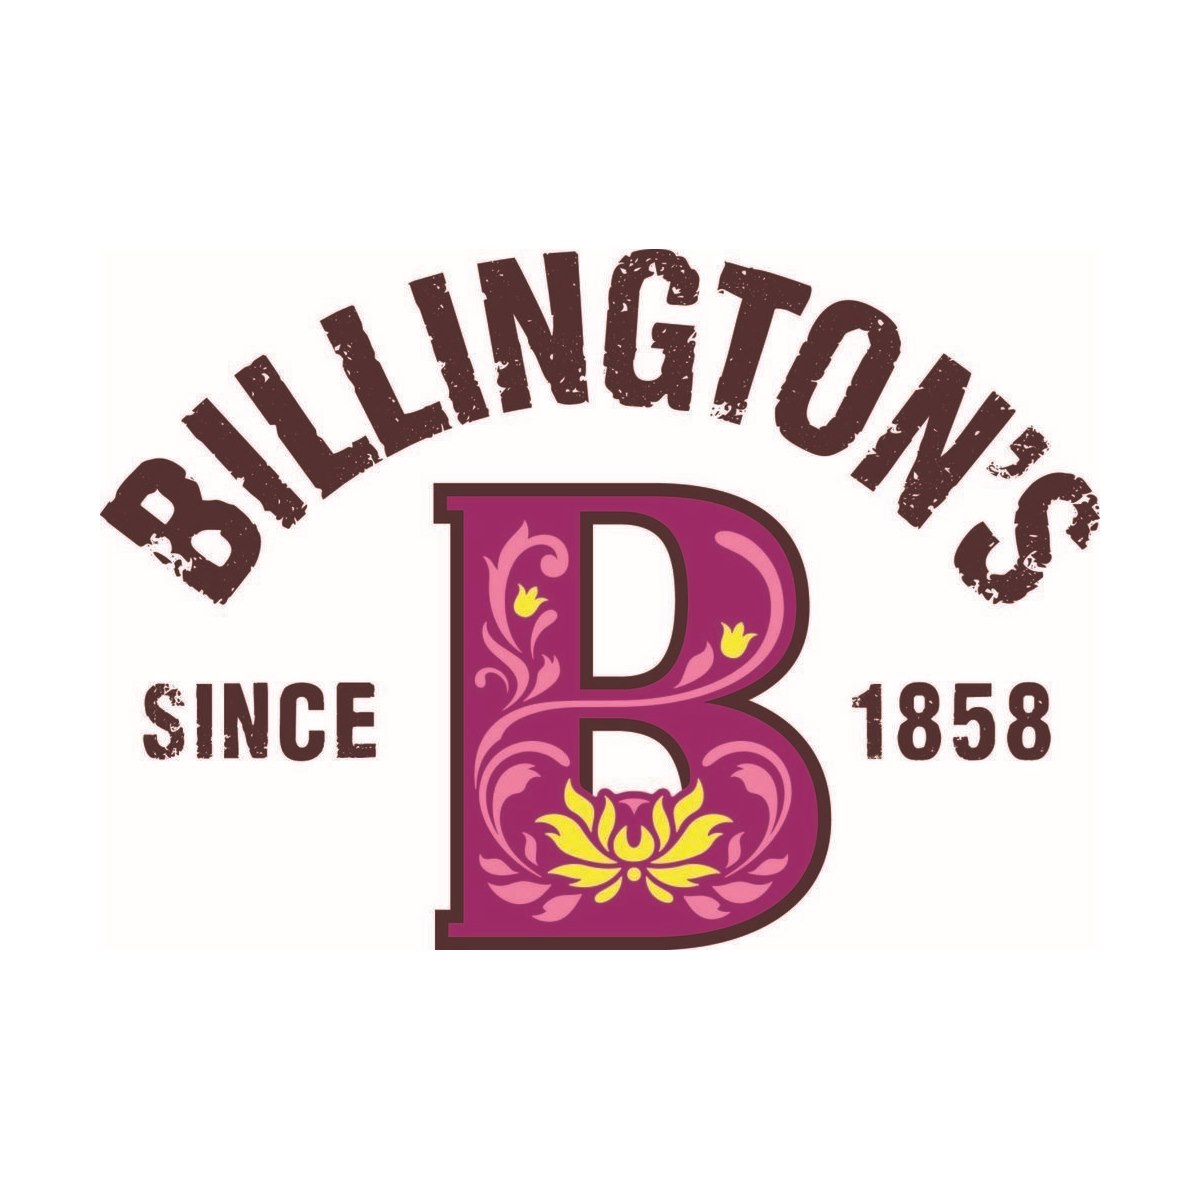 Where to Buy Billingtons Sugar